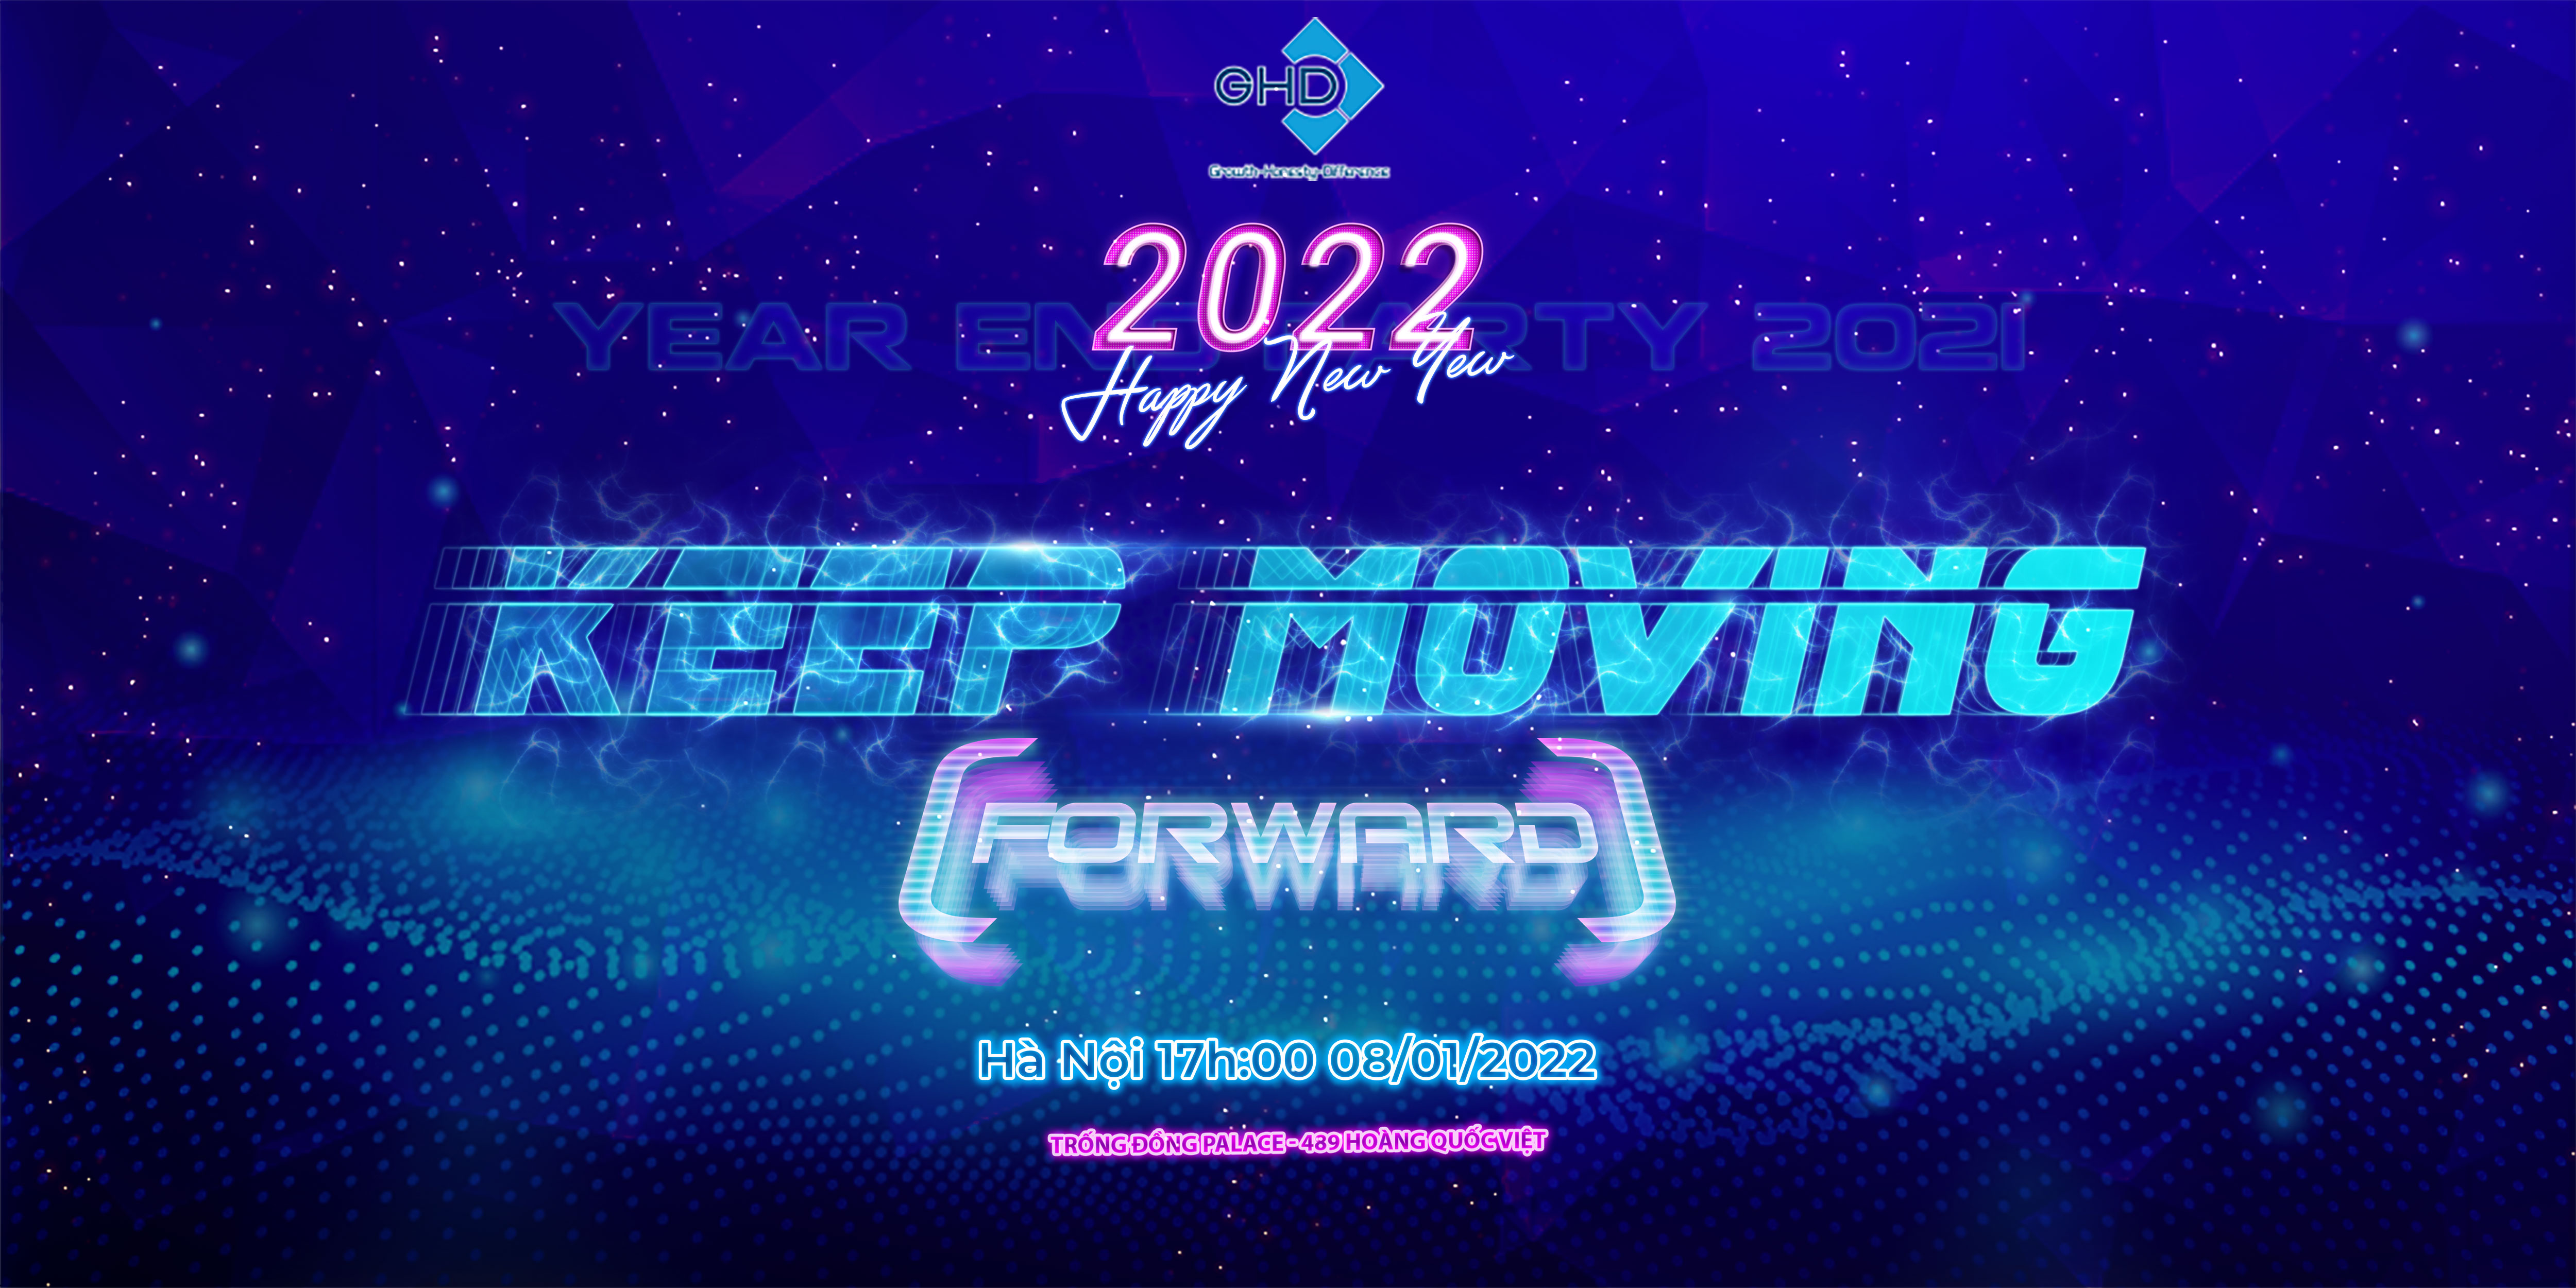 GHD Gala dinner 2022 - "Keep moving forward”